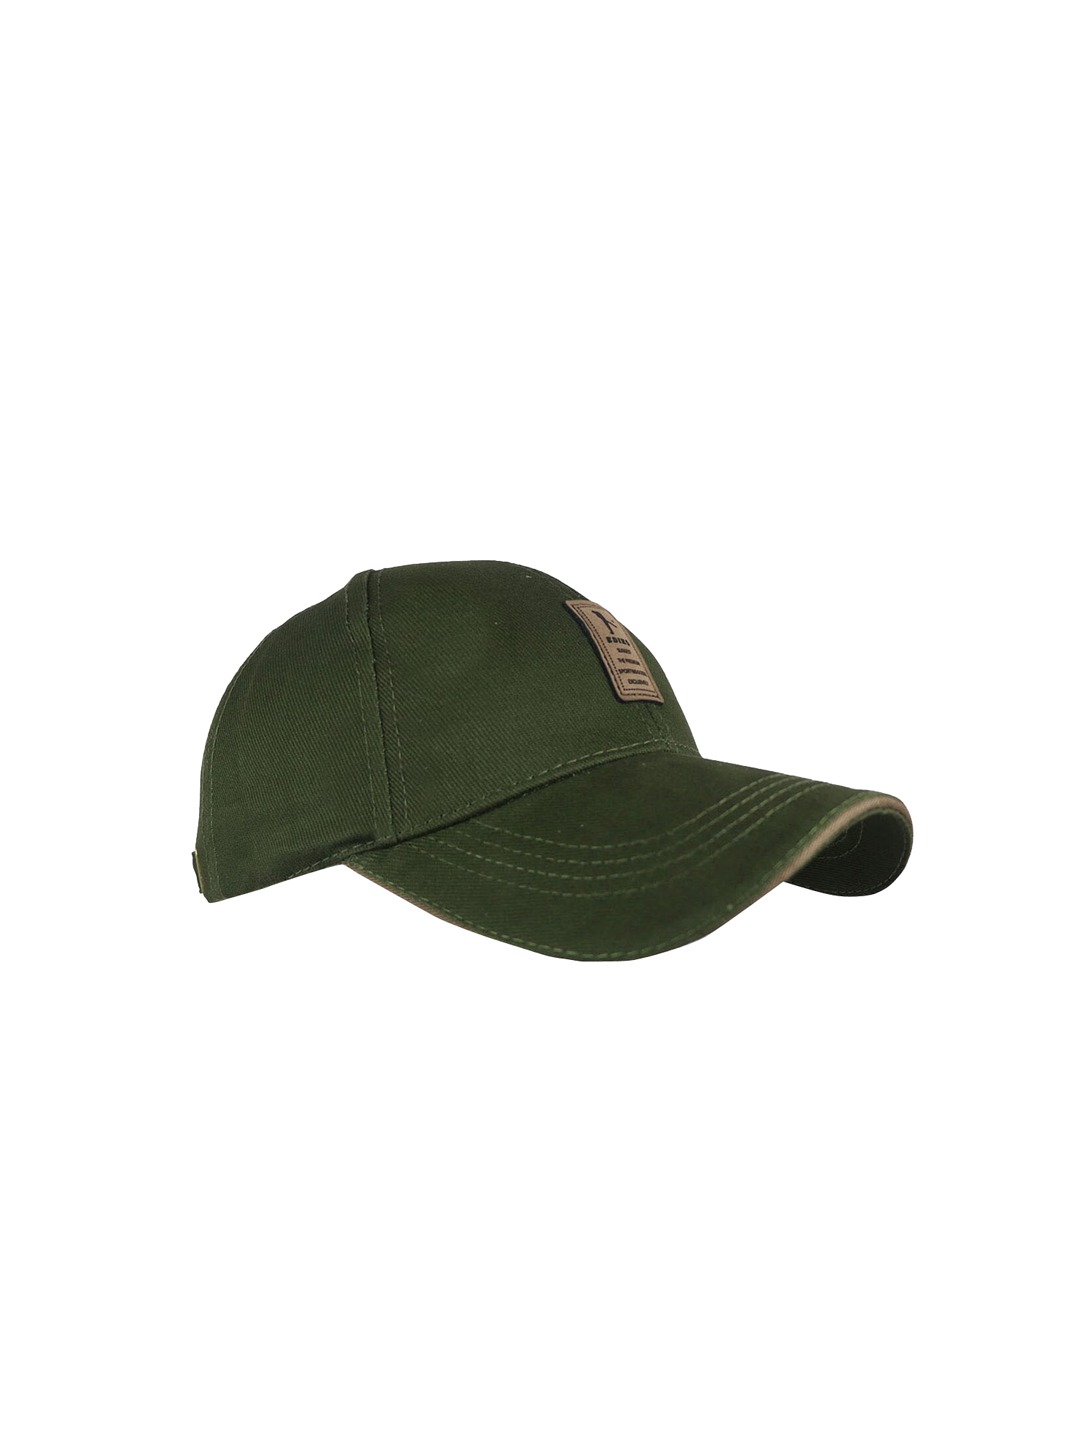 Accessories Caps | iSWEVEN Unisex Green Solid Snapback Cap - IB14525